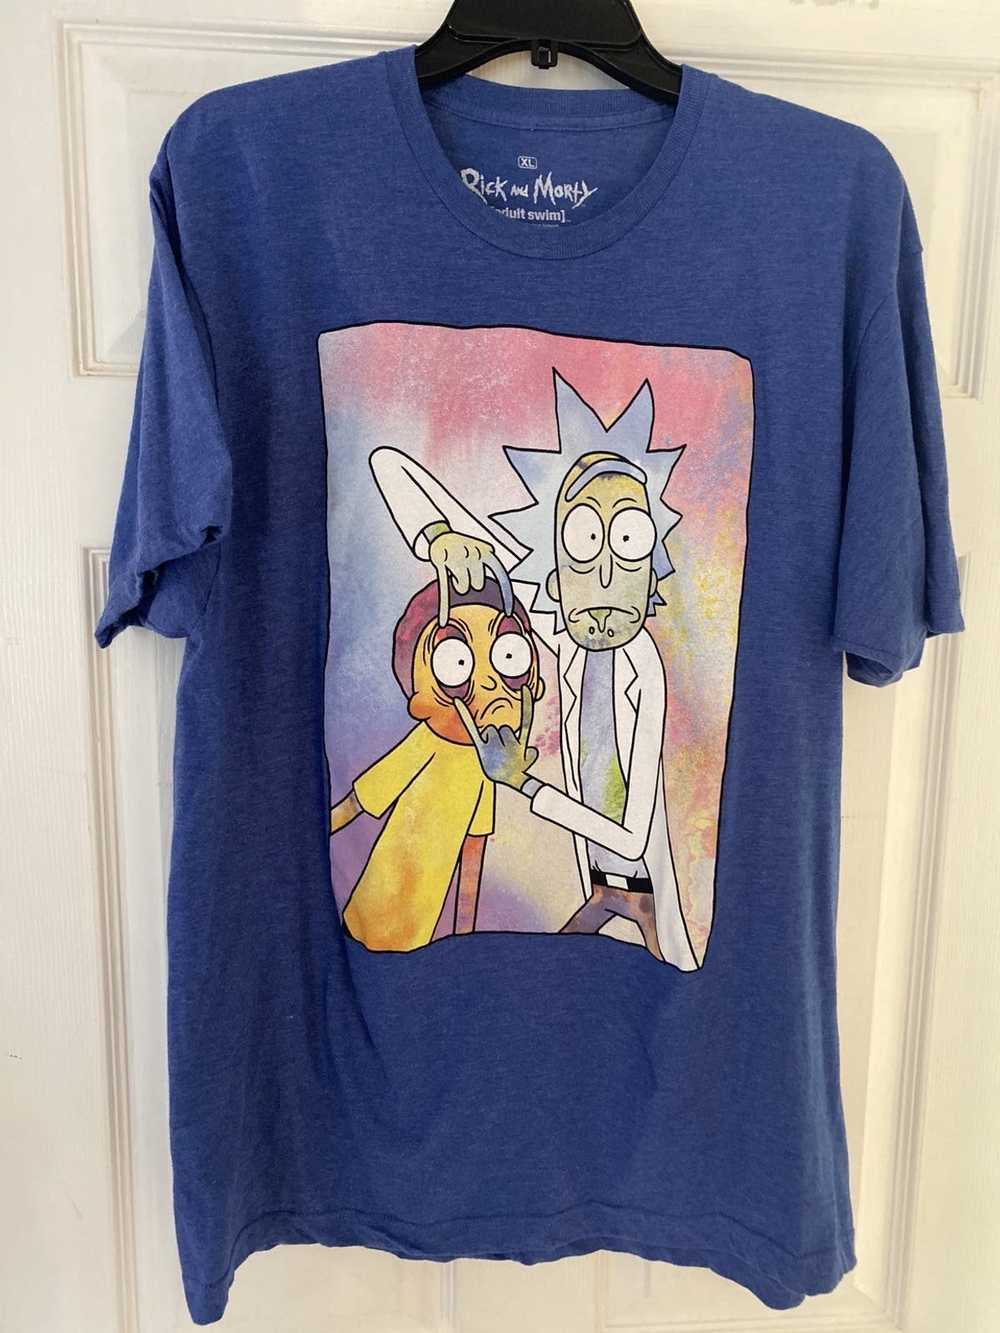 Vintage Rick and Morty Adult Swim t shirt - image 1